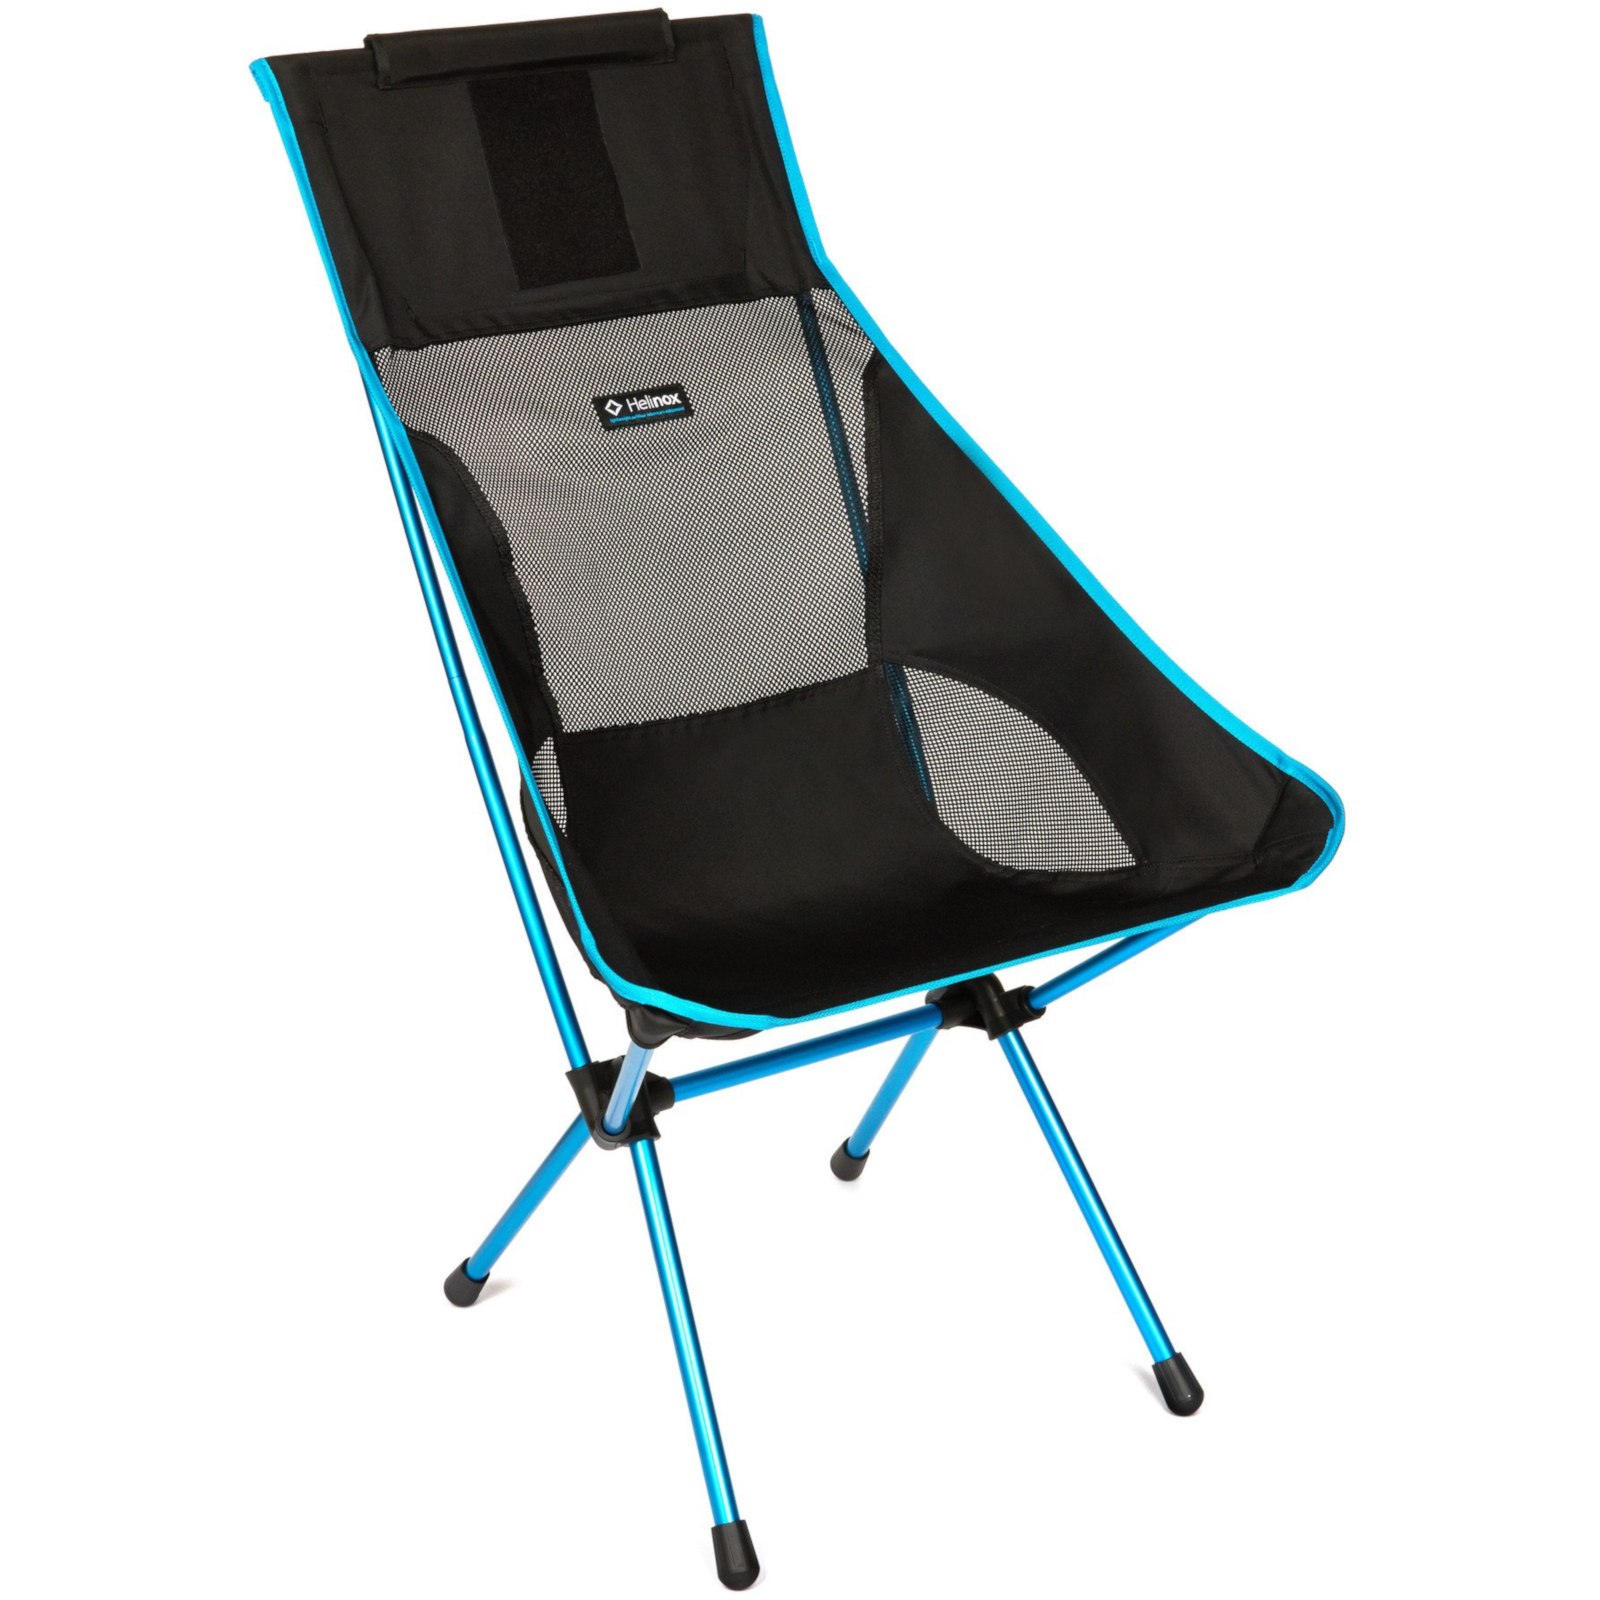 Productfoto van Helinox Sunset Chair - Black / O. Blue